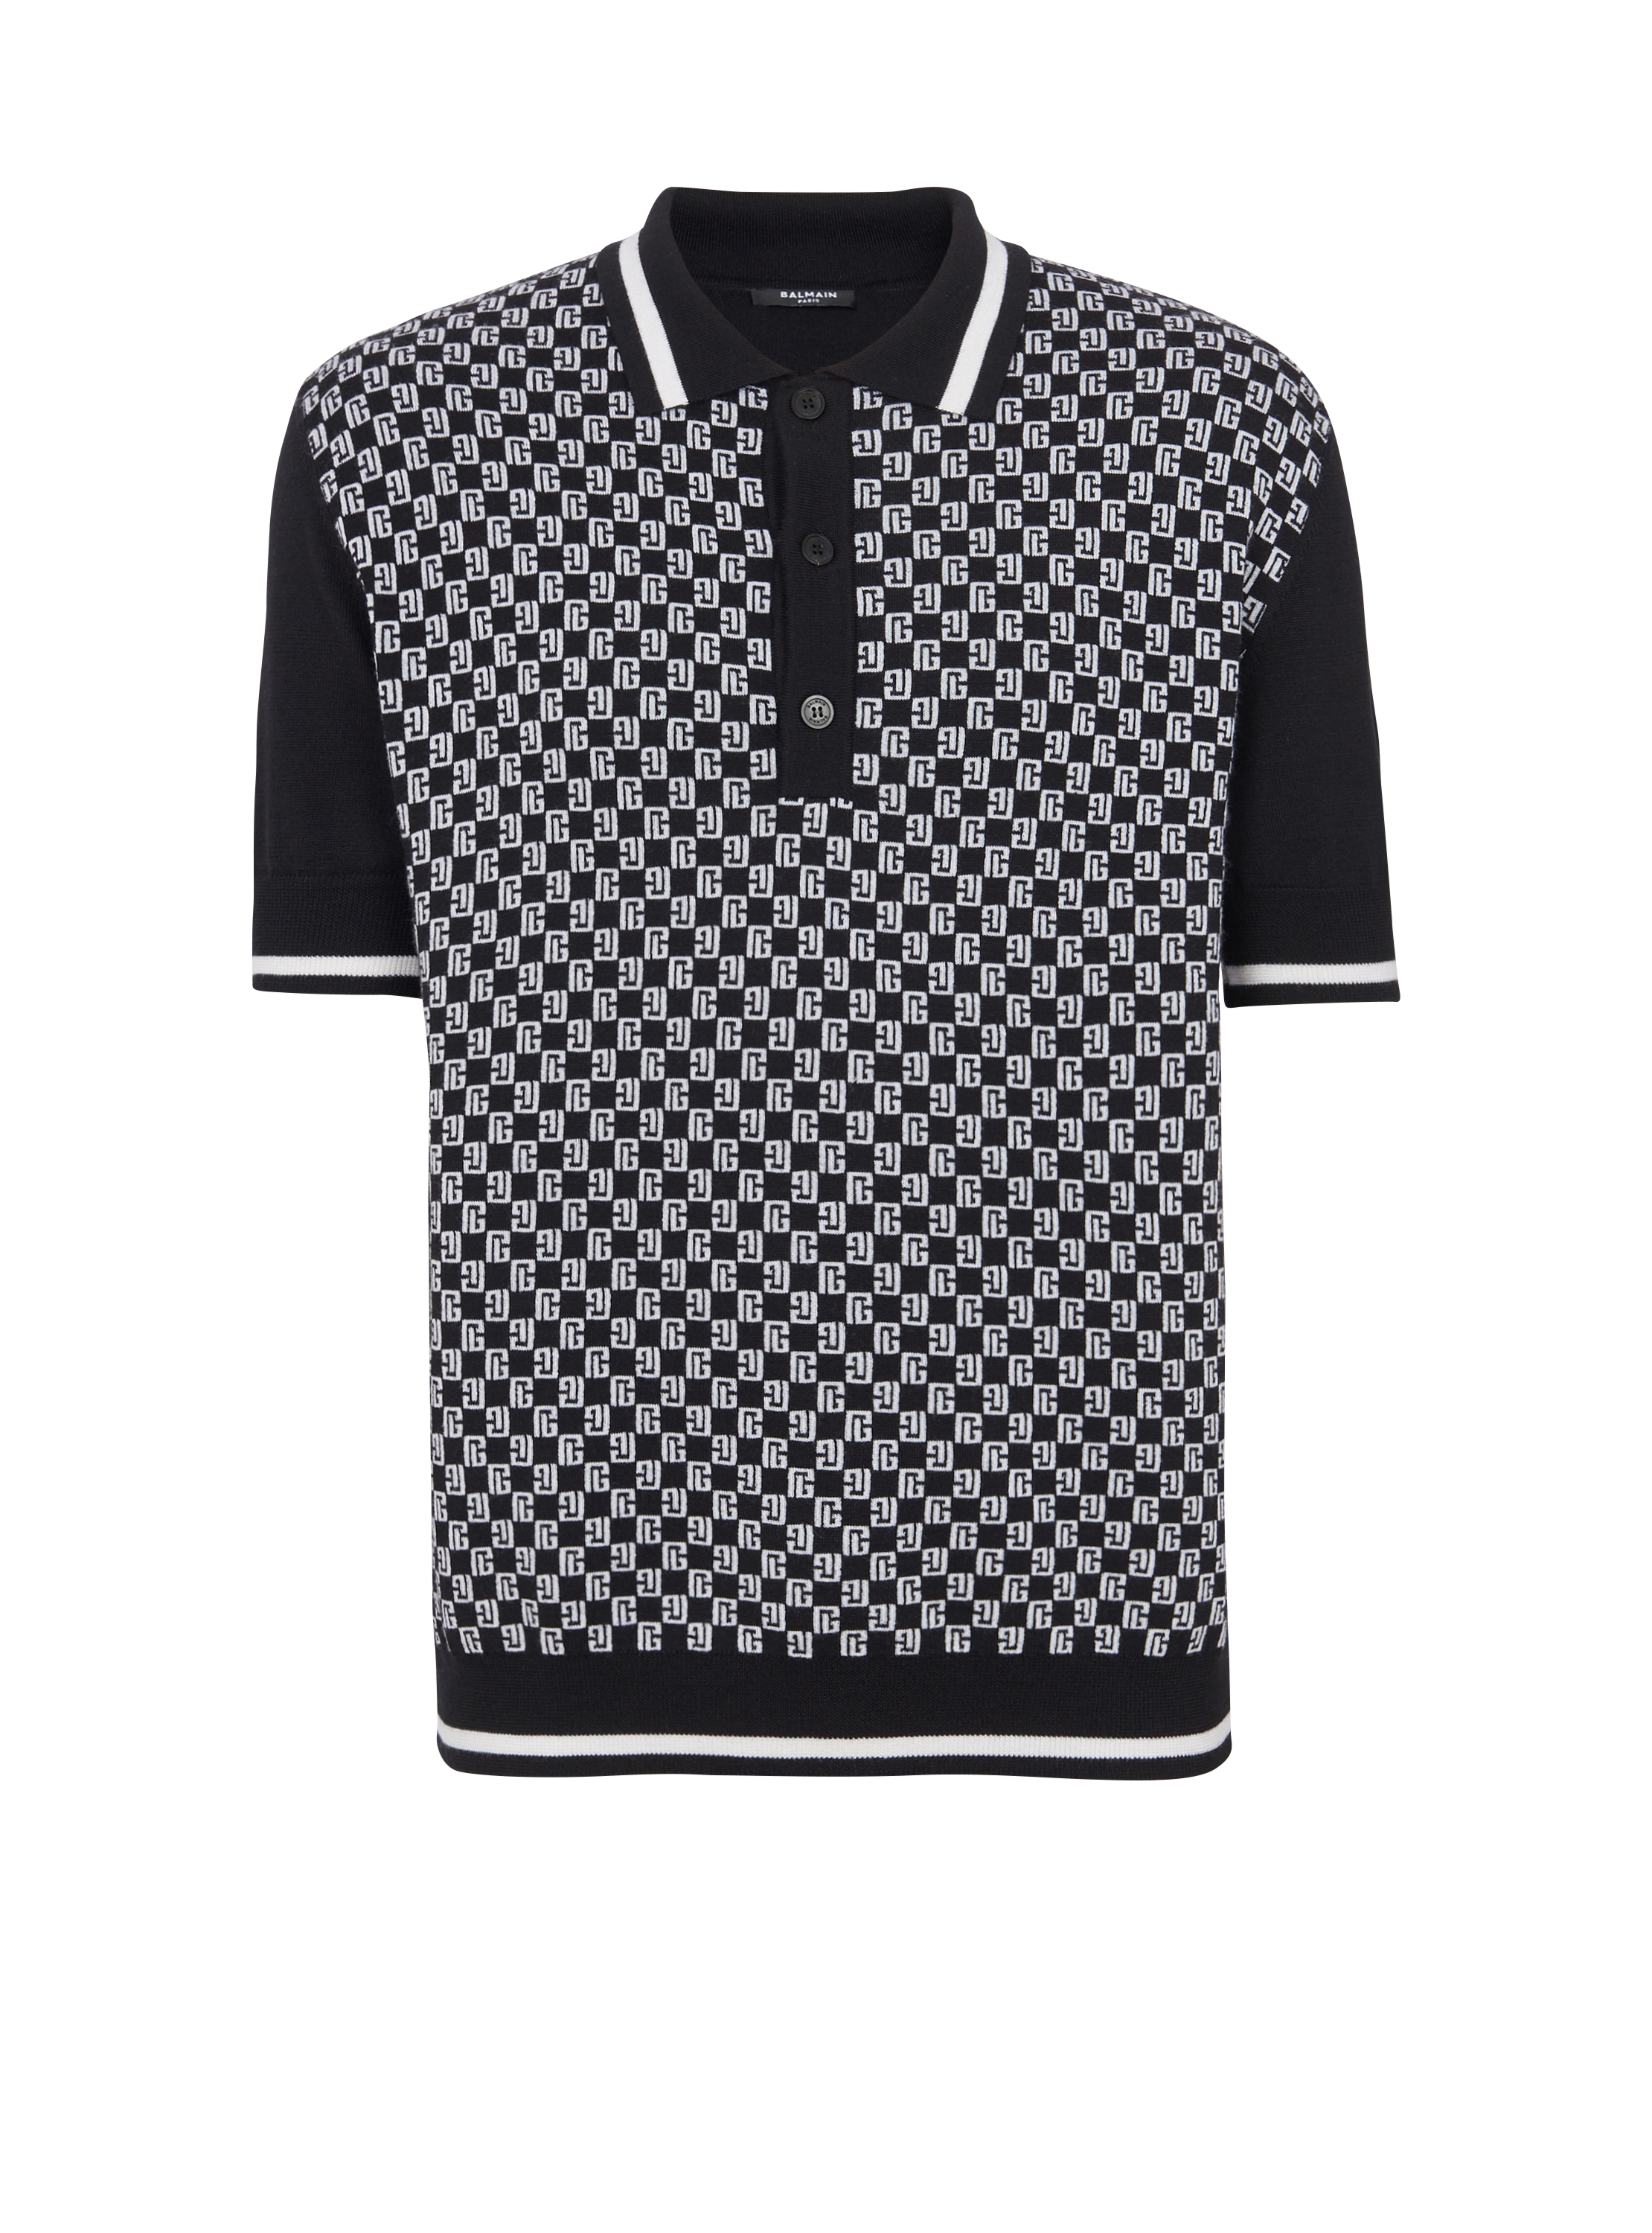 Poloshirt mit Mini-Monogramm, schwarz, hi-res